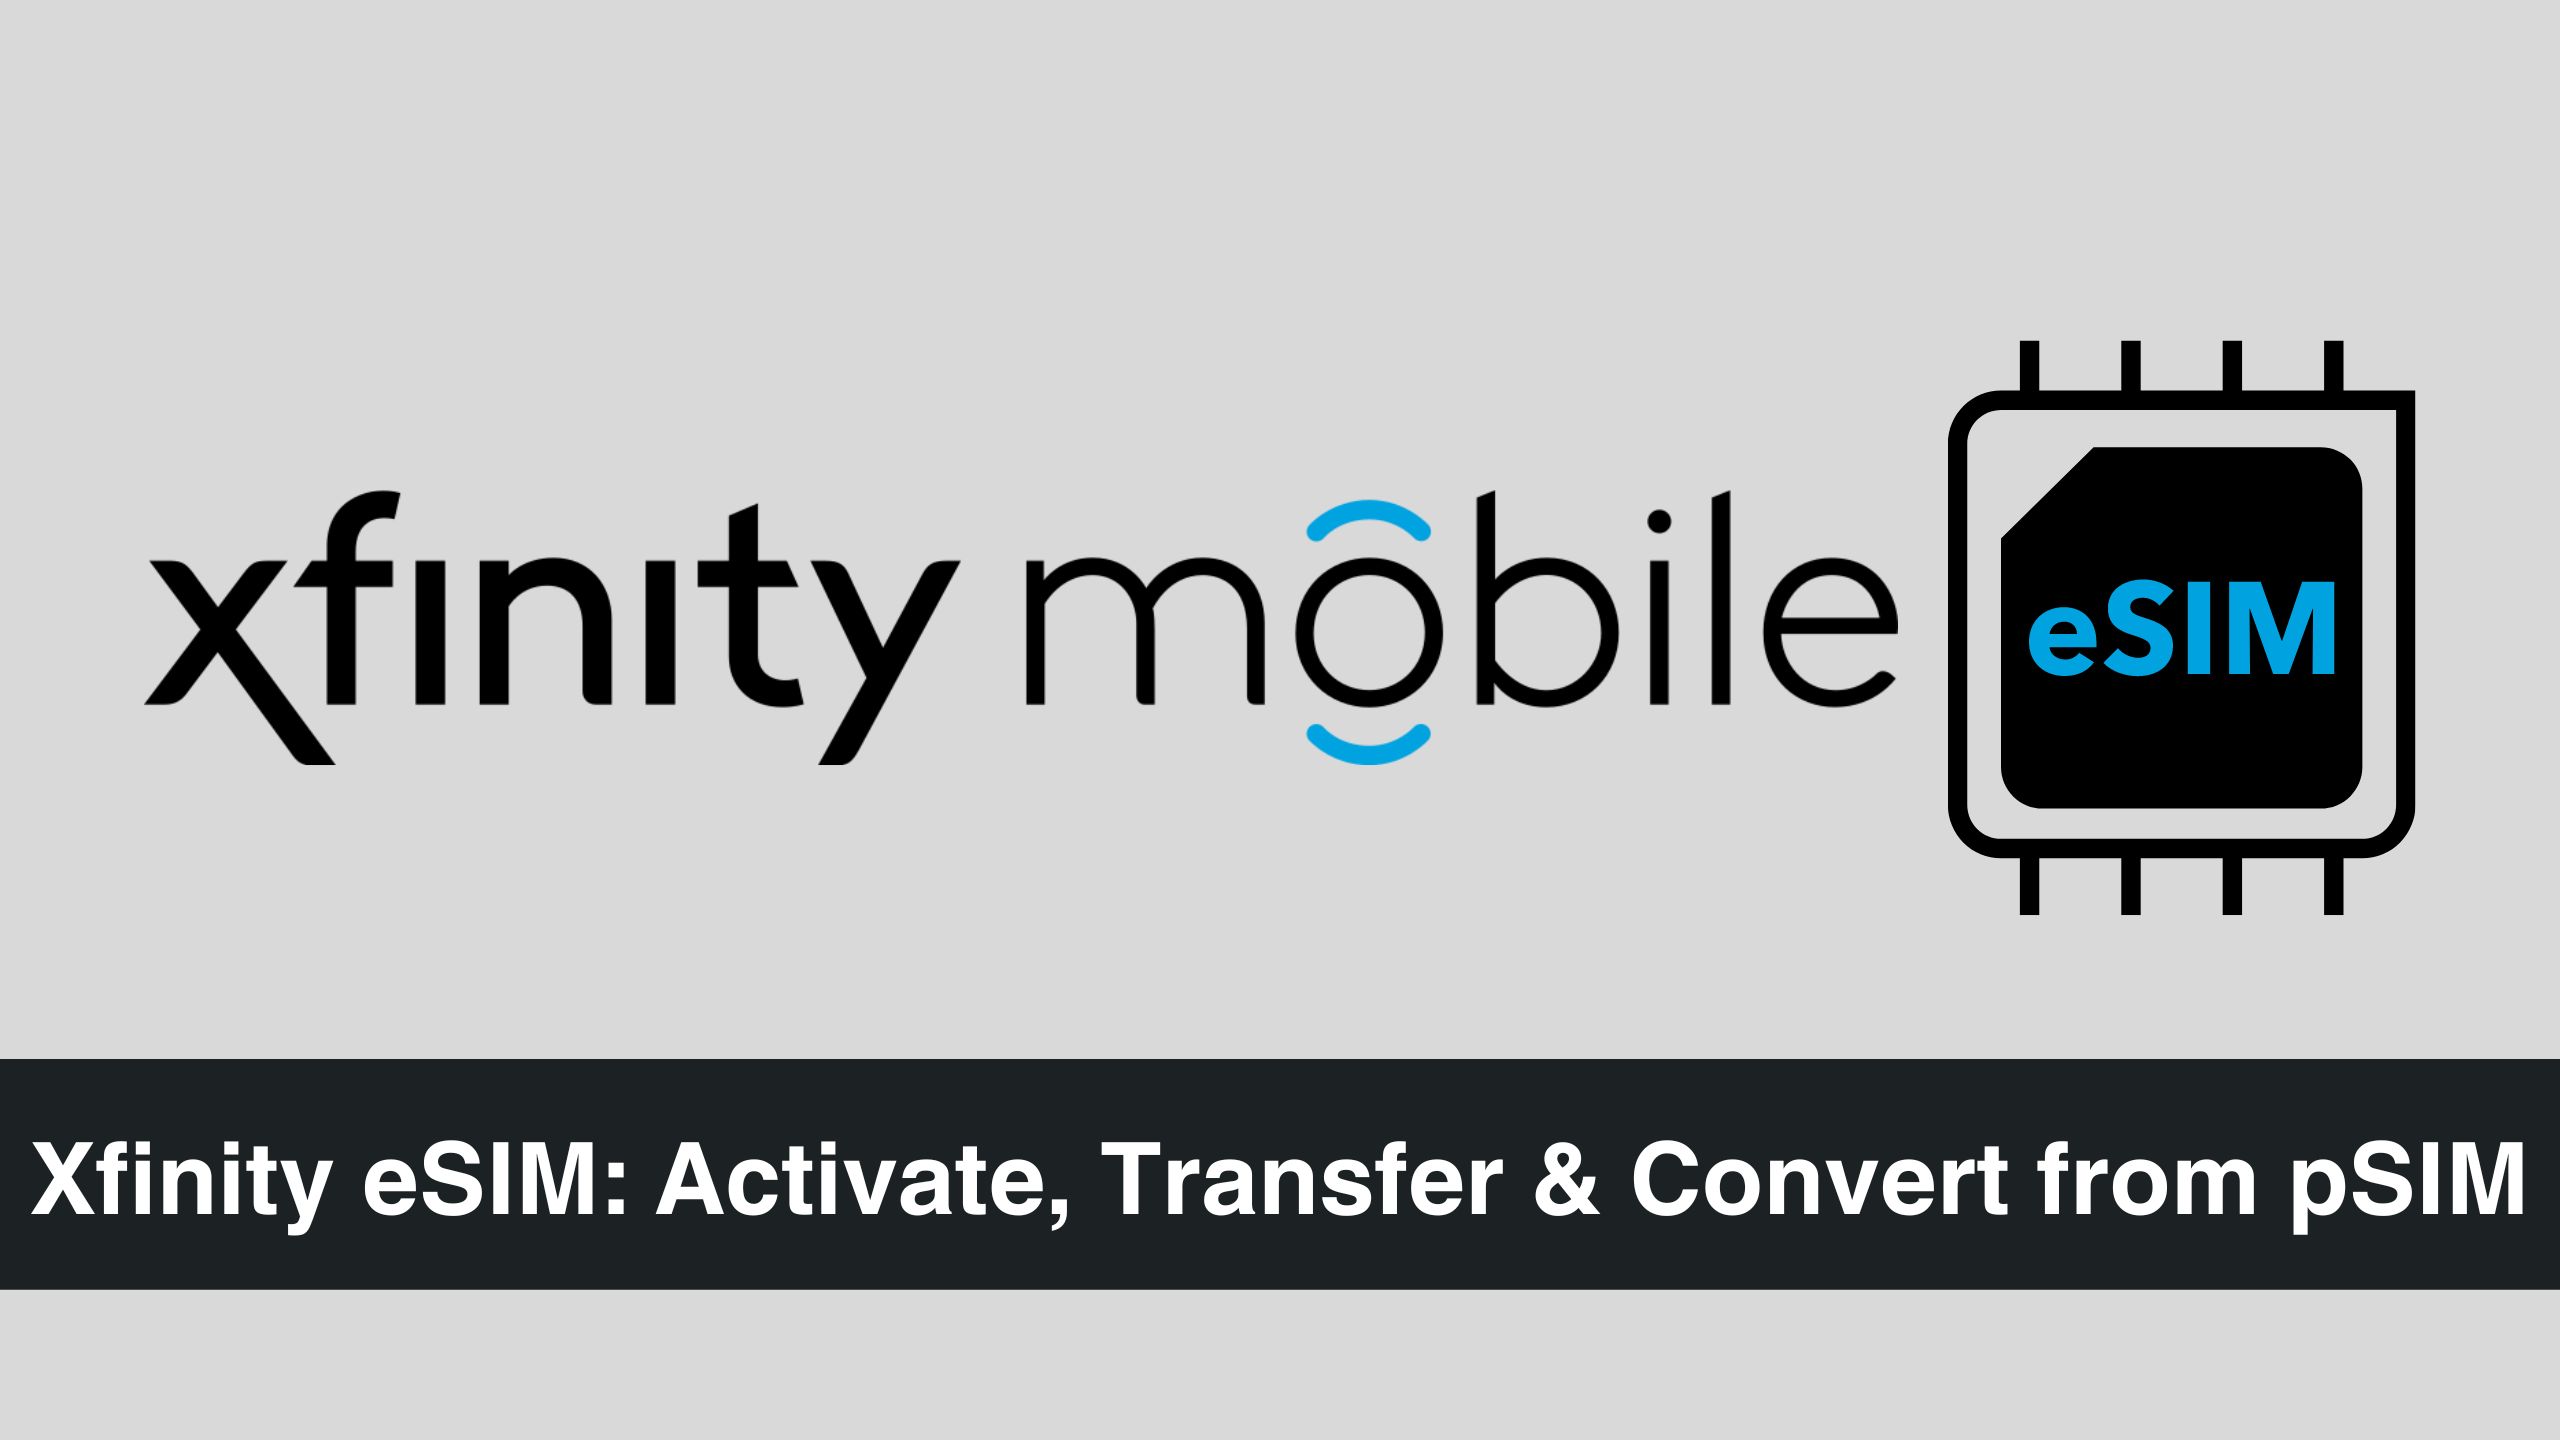 Xfinity eSIM: Activate, Transfer & Convert from pSIM